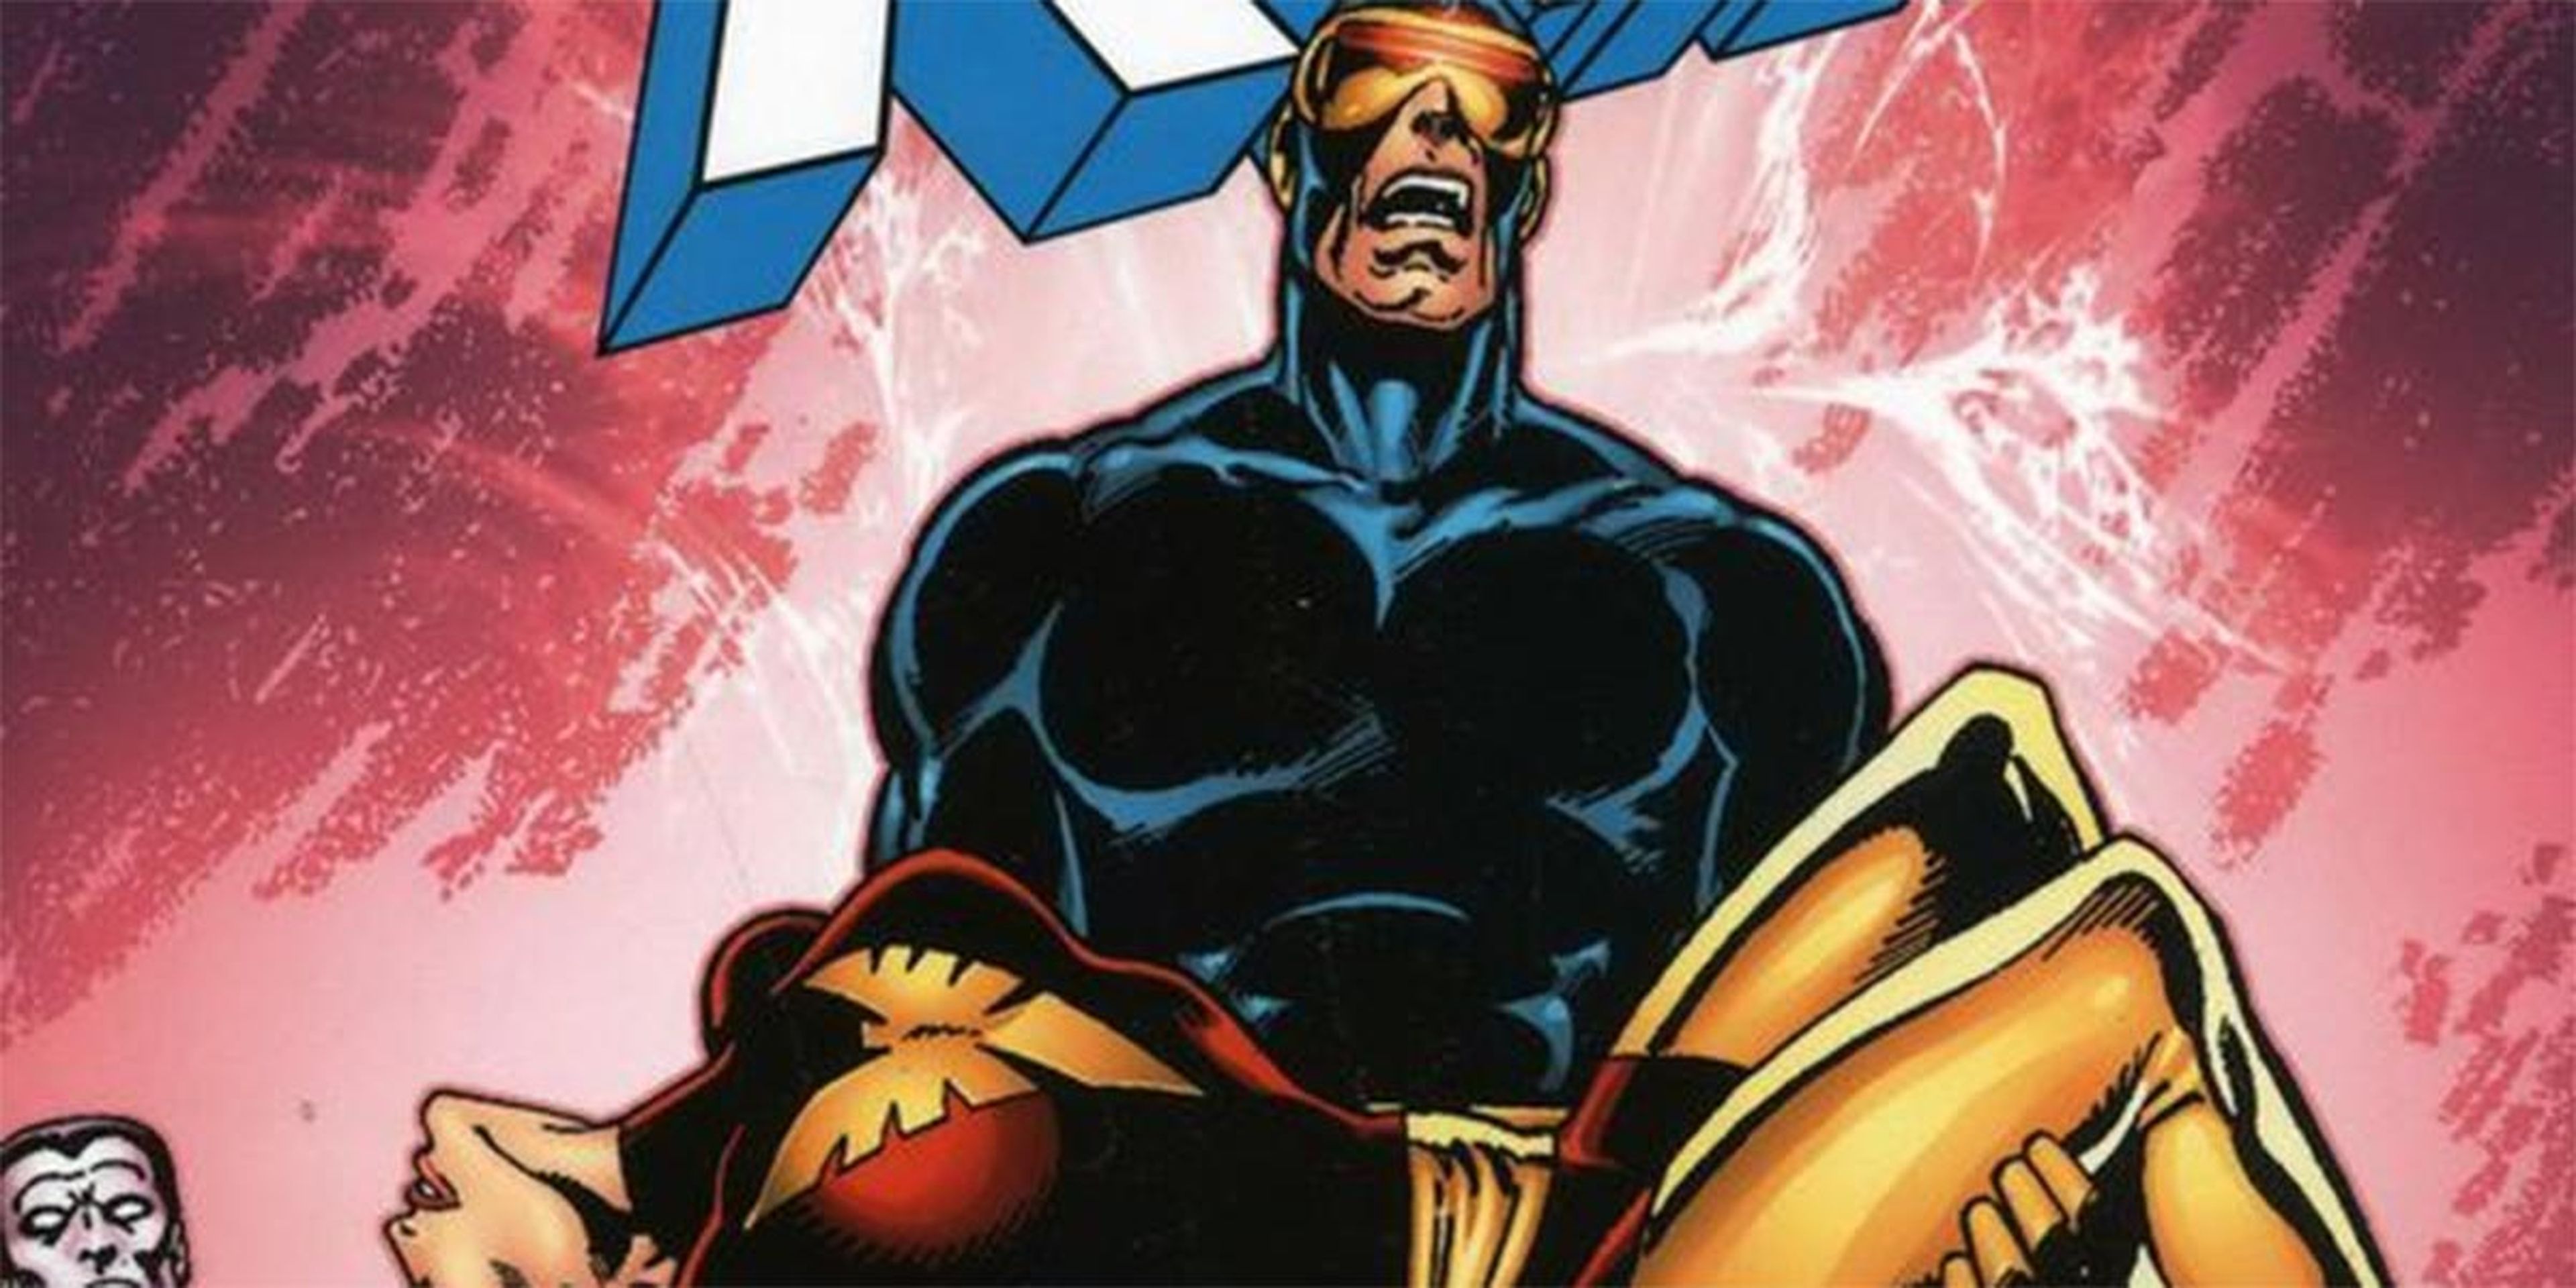 Reseña de X-men: La saga de Fénix Oscura - Un clásico de Marvel